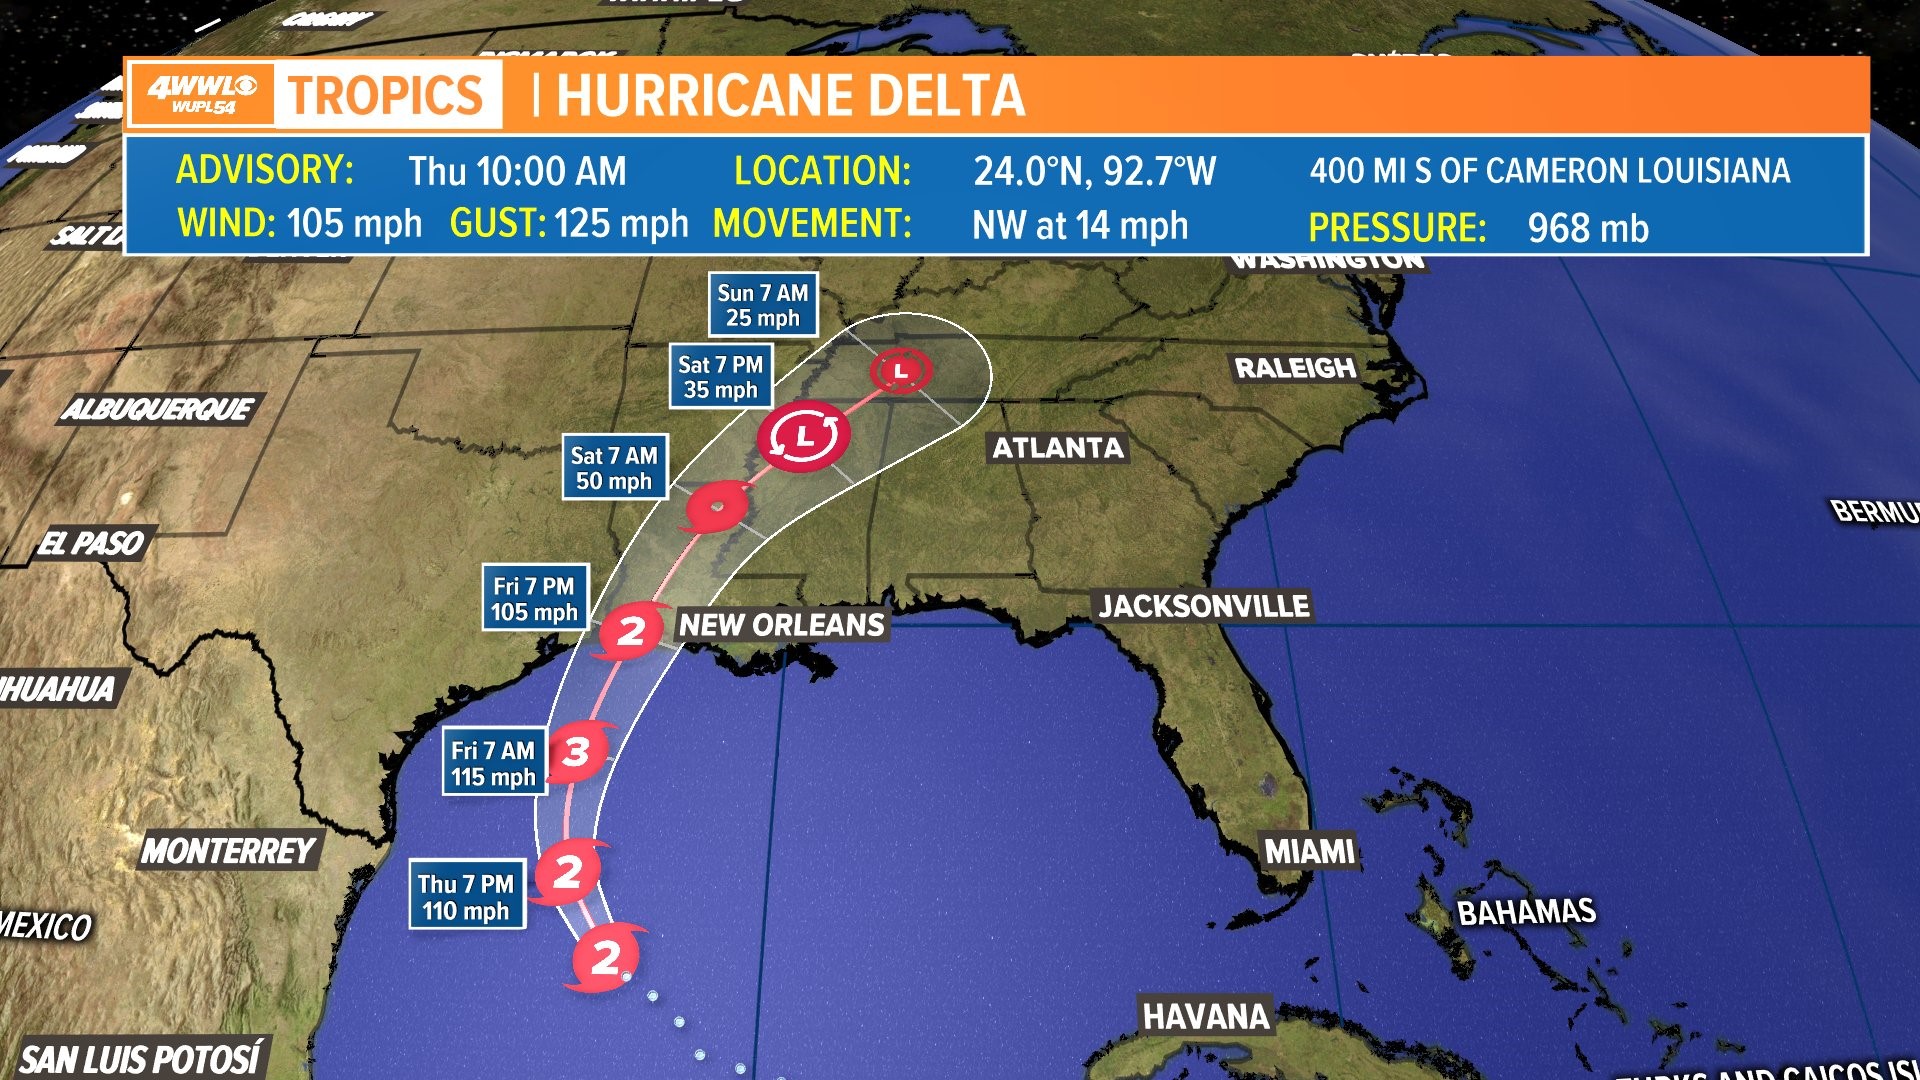 Thursday 10 am Tropics update: Hurricane Delta brings chances of Tornados | www.paulmartinsmith.com